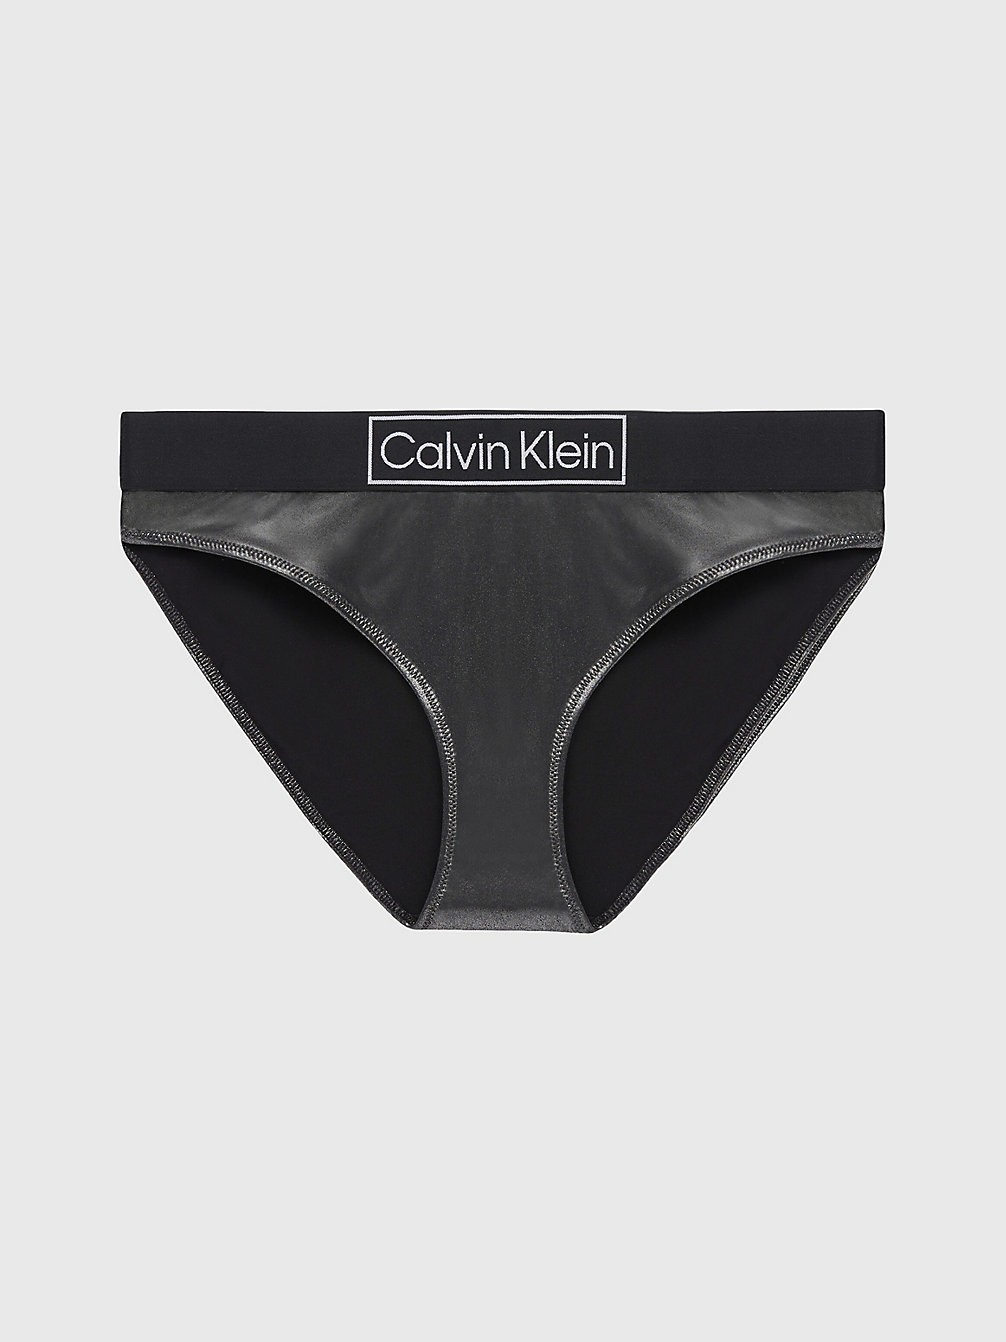 PVH BLACK > Низ бикини - Core Festive > undefined Женщины - Calvin Klein